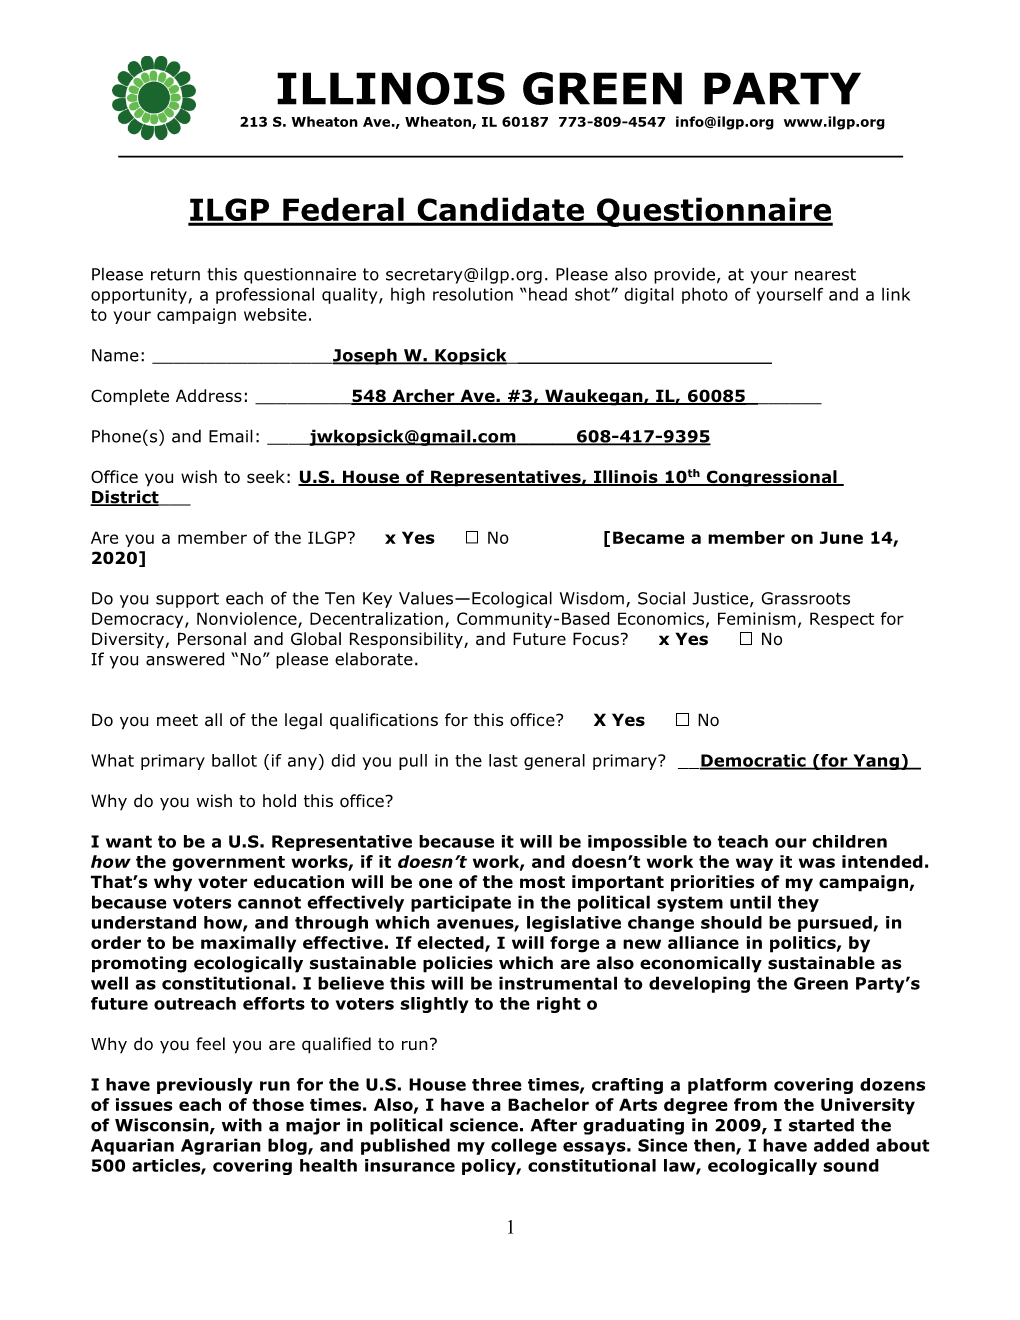 ILGP General Candidate Questionnaire